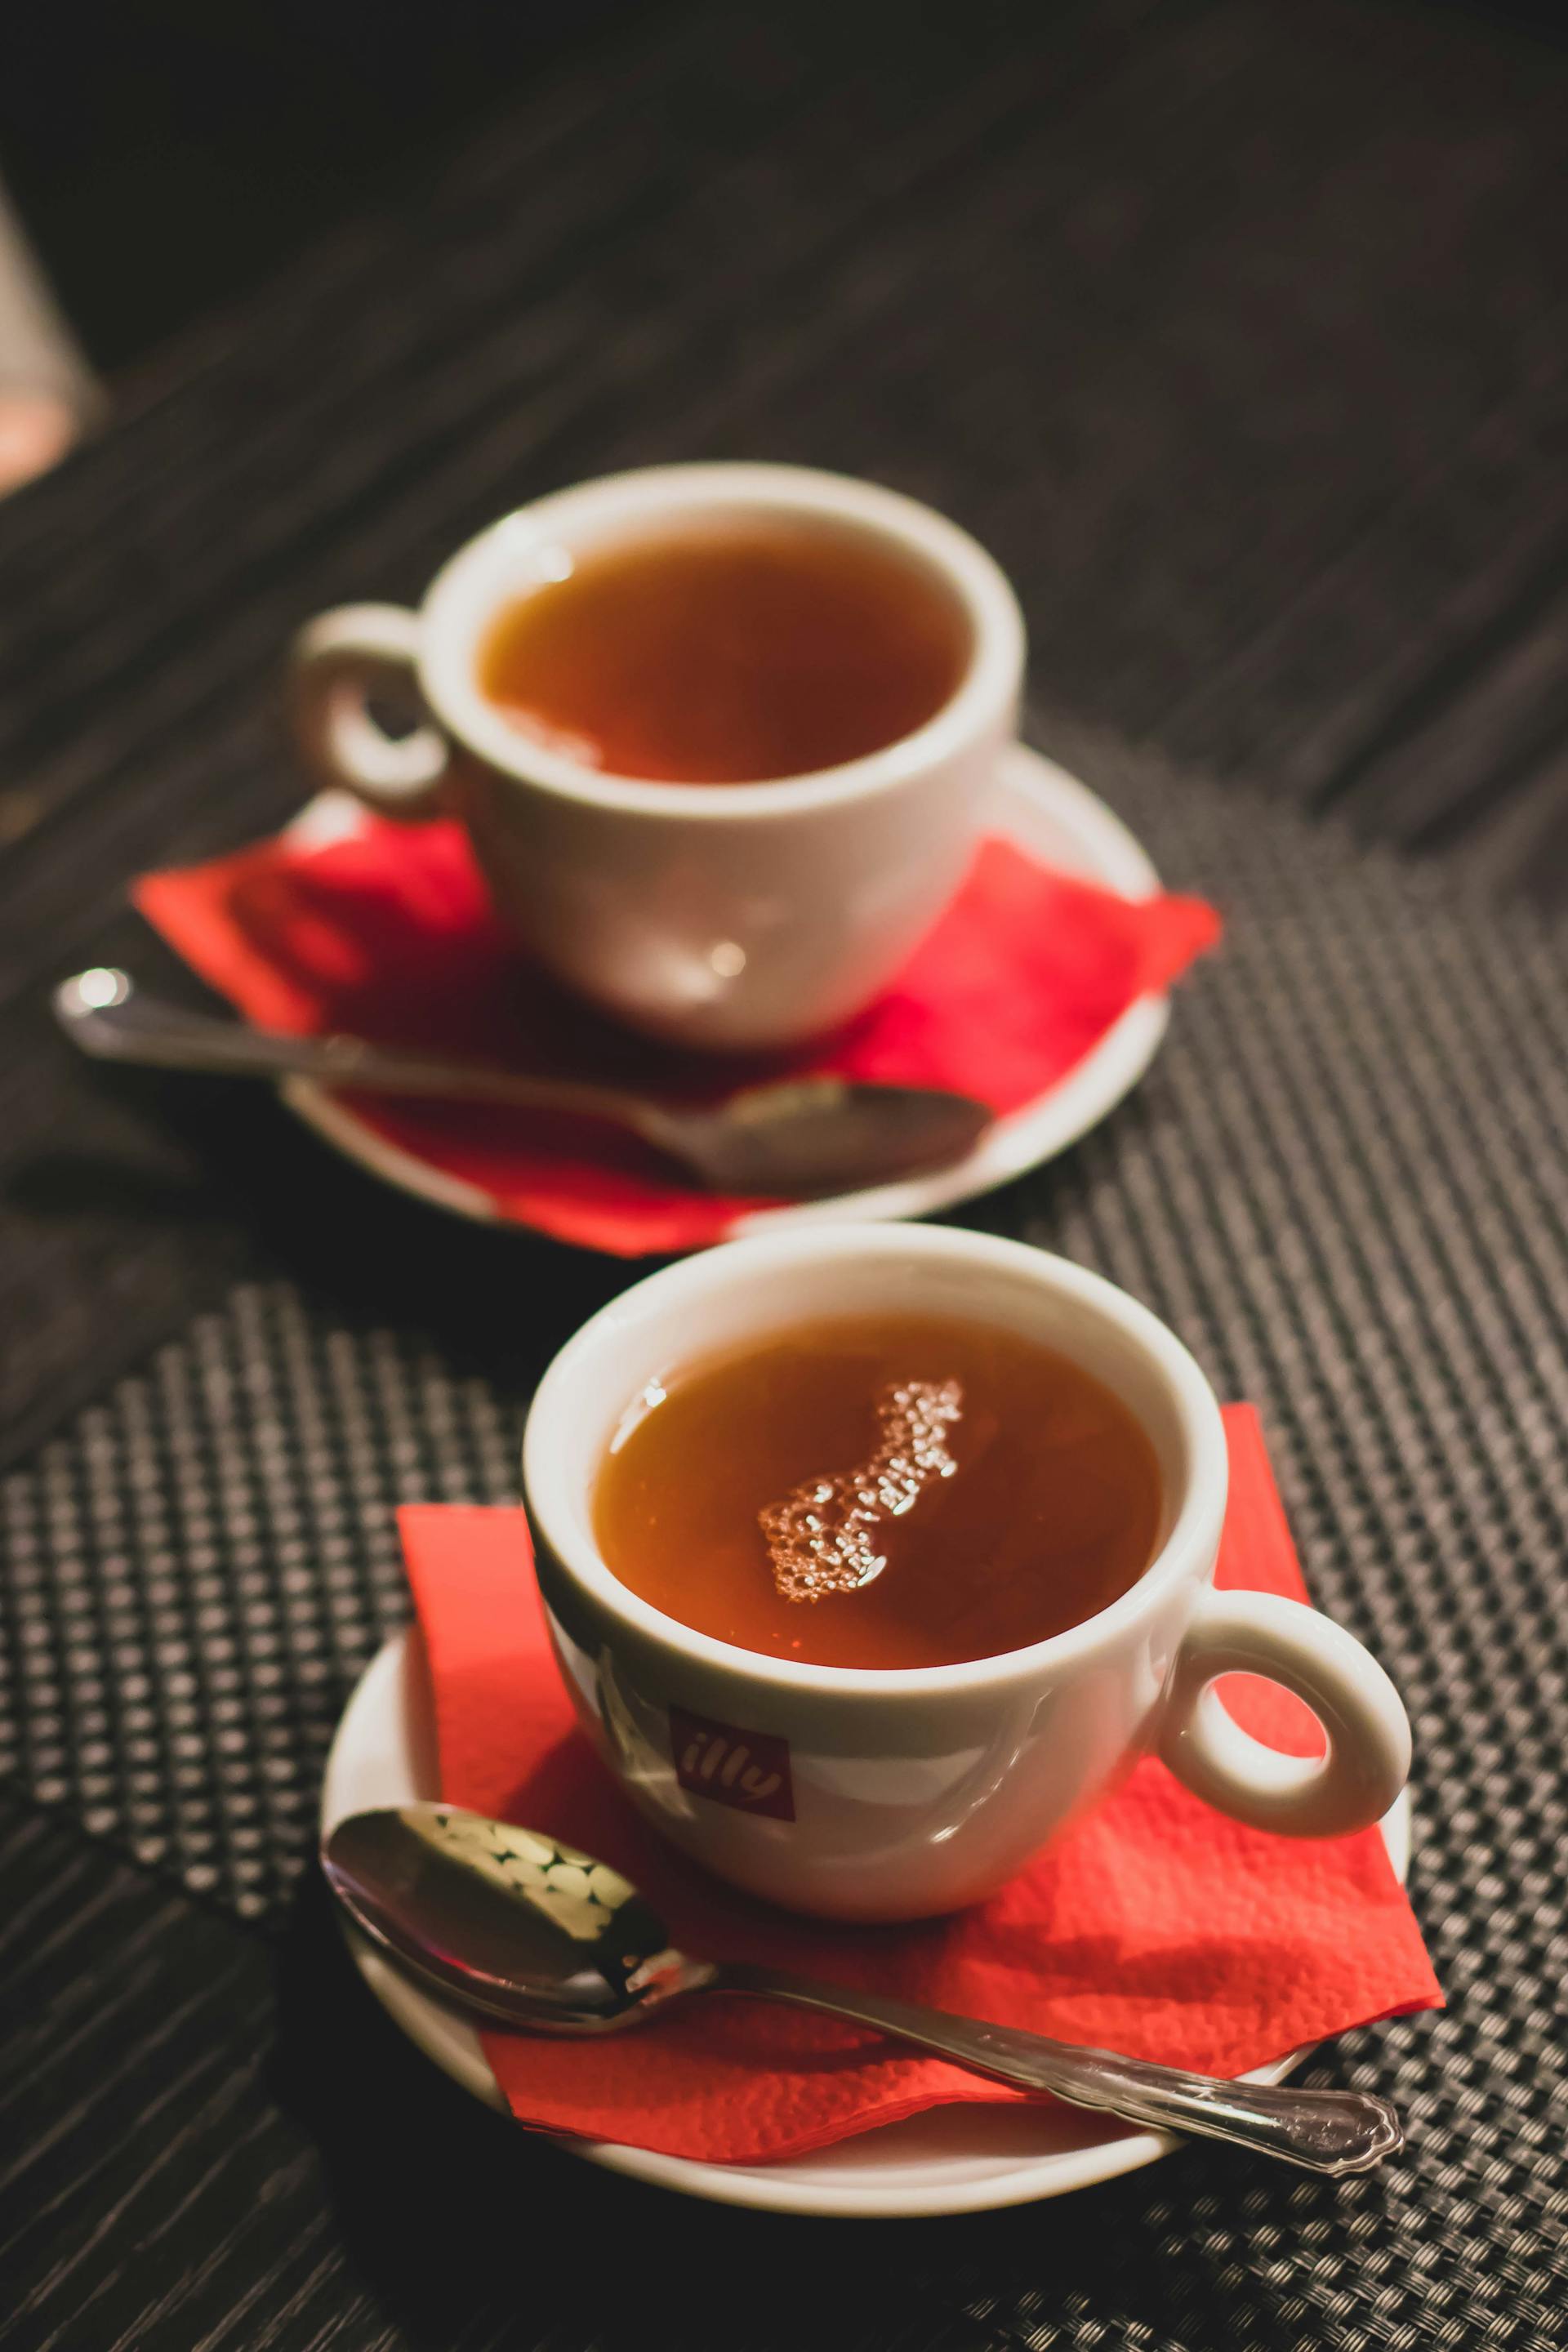 Two cups of tea | Source: Pexels